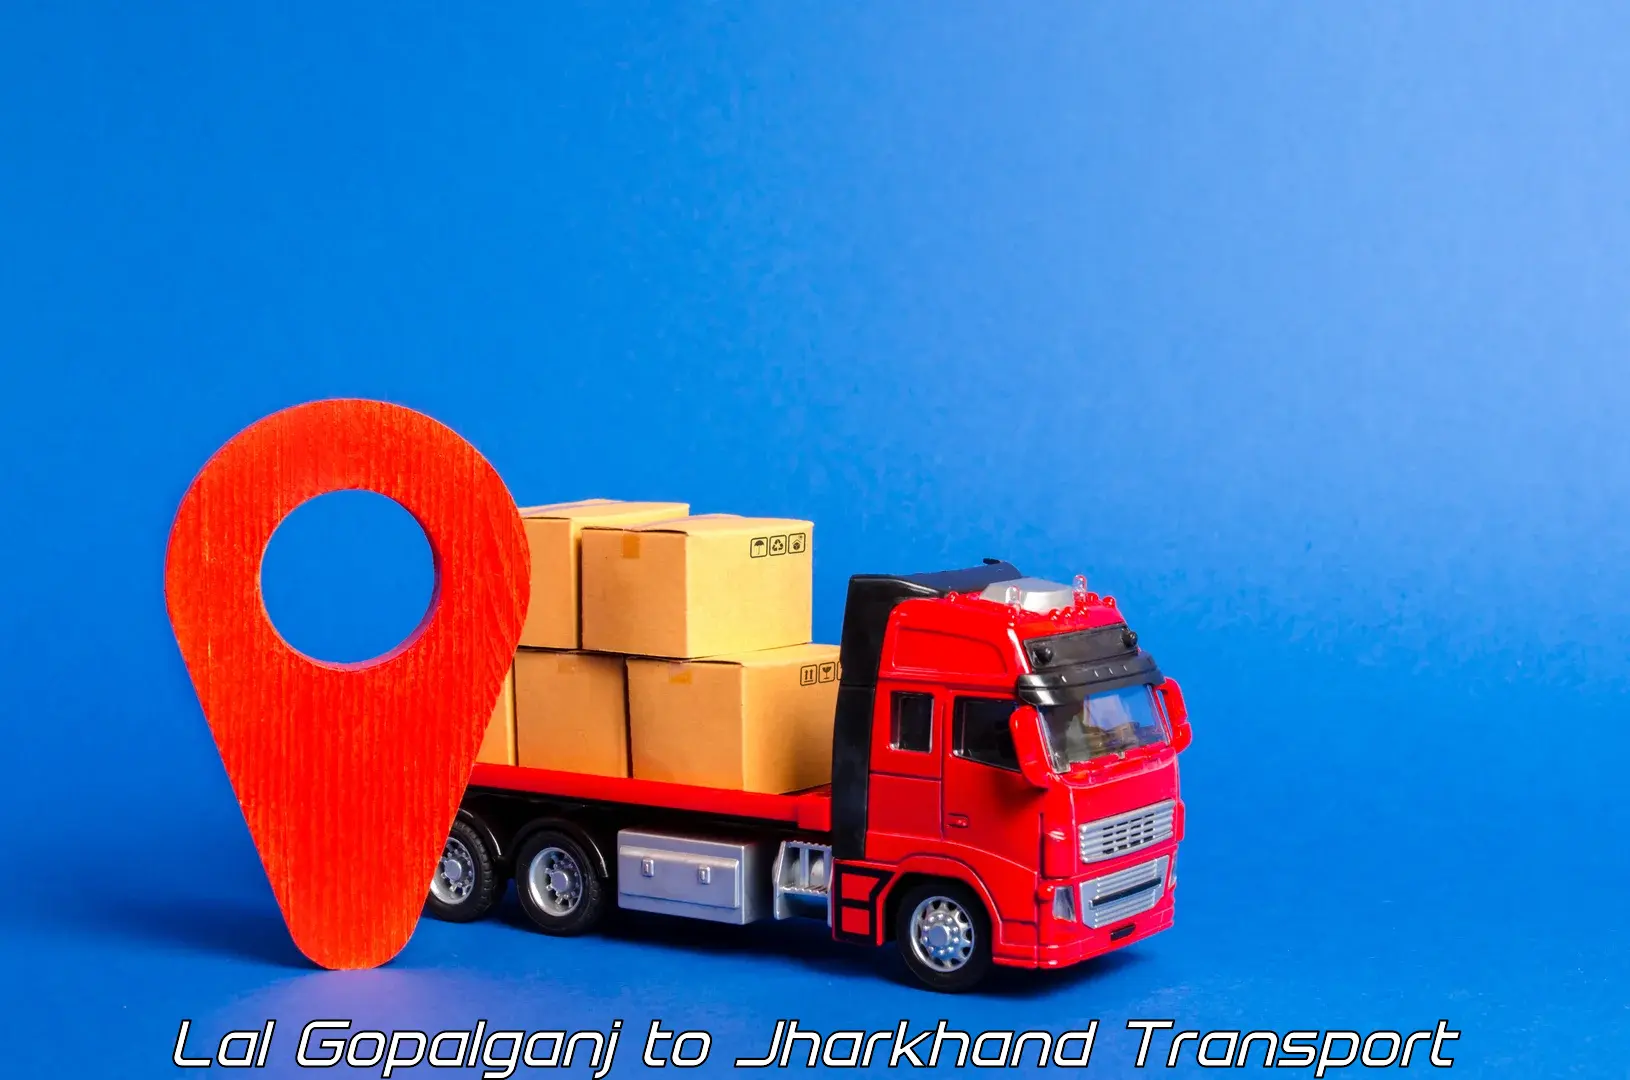 Transport in sharing Lal Gopalganj to Jharkhand